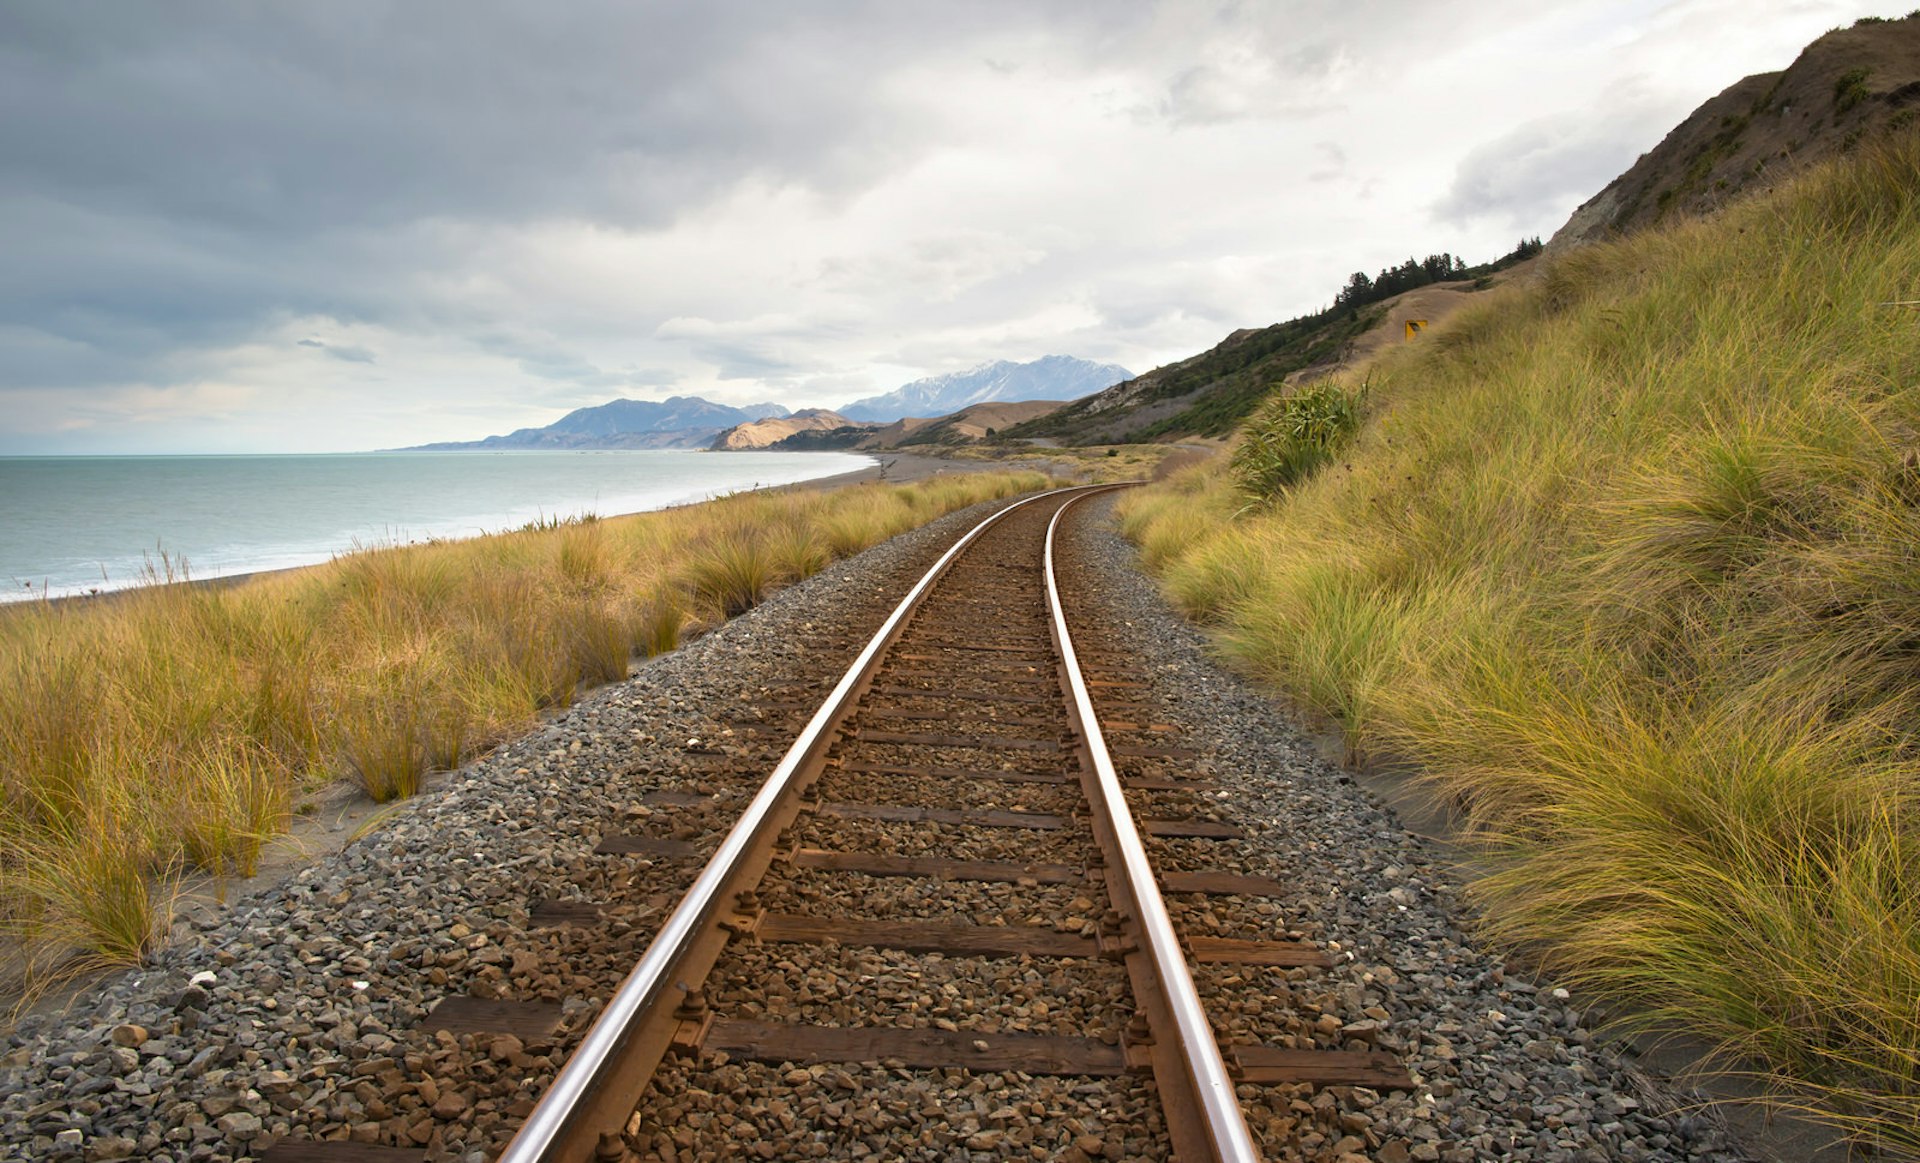 A stretch of Kaikoura’s dramatic coast-hugging railway © yongyot therdthai / Shutterstock